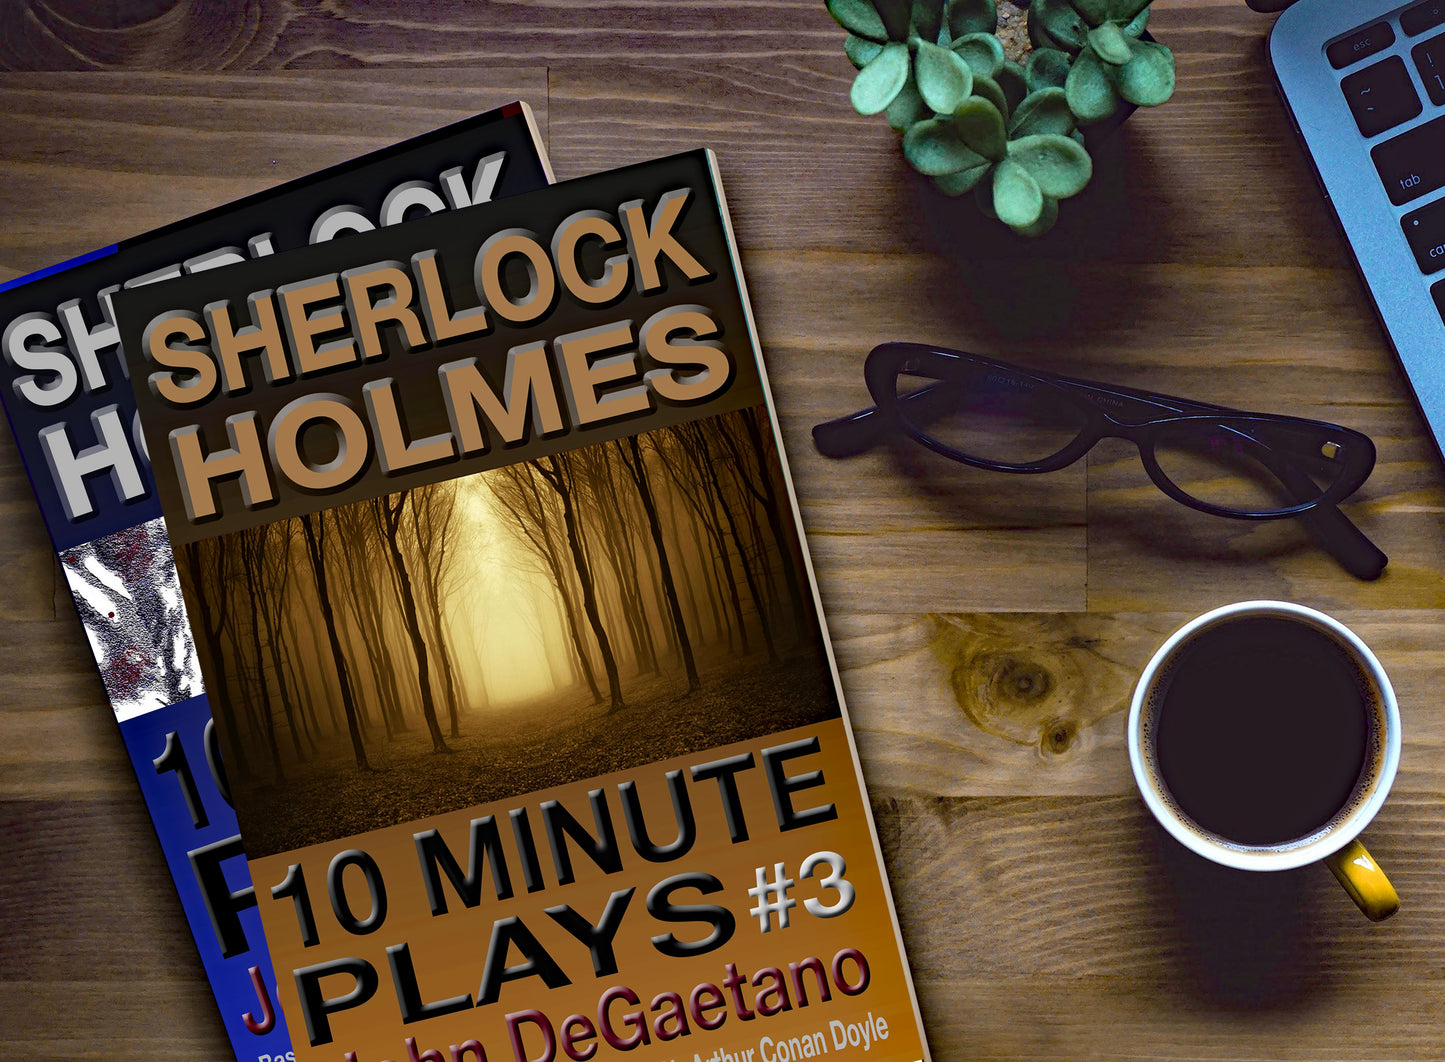 Sherlock Holmes 10 Minute Plays: Book 3